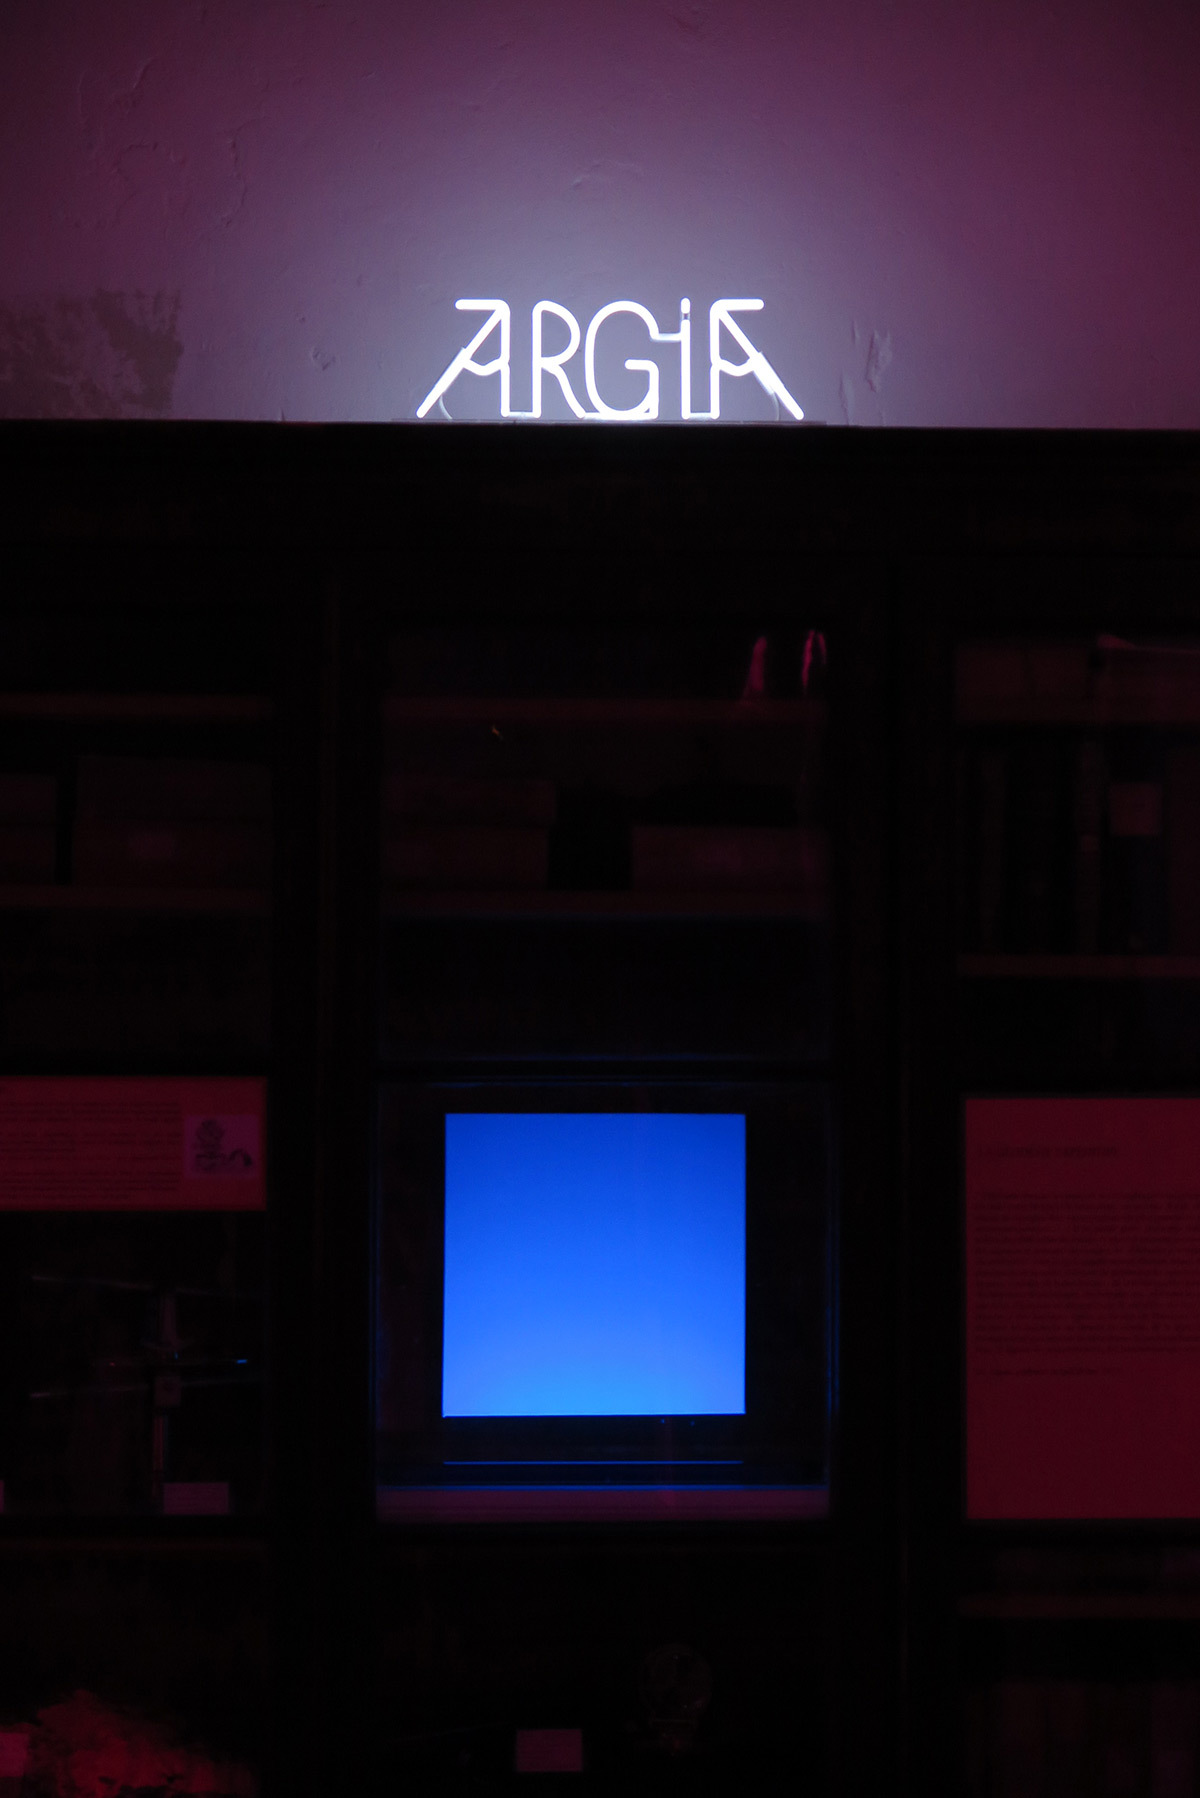 Argia, de Eric Michel - Château-Observatoire Abbadia, Hendaye, France - Perceptions 3, explorations sensibles 2016 - Photo : Eric Michel